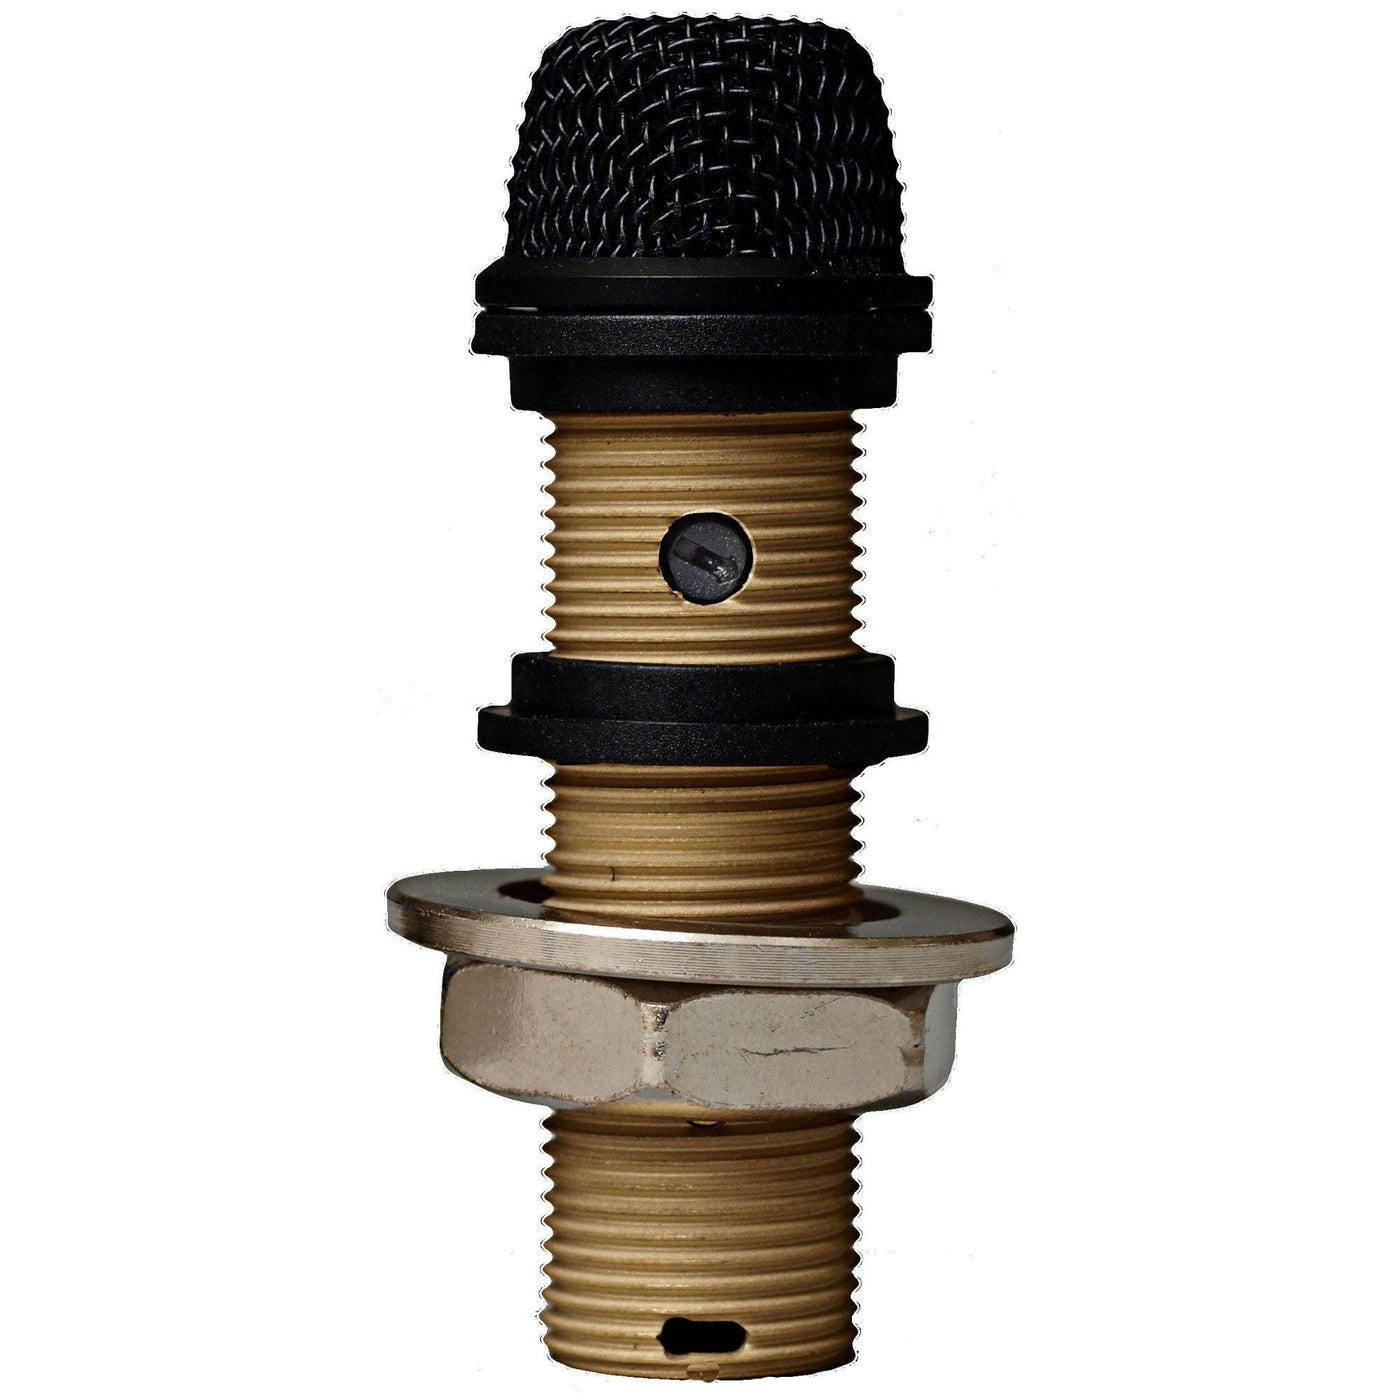 Astatic 220VP Button Microphone - Black